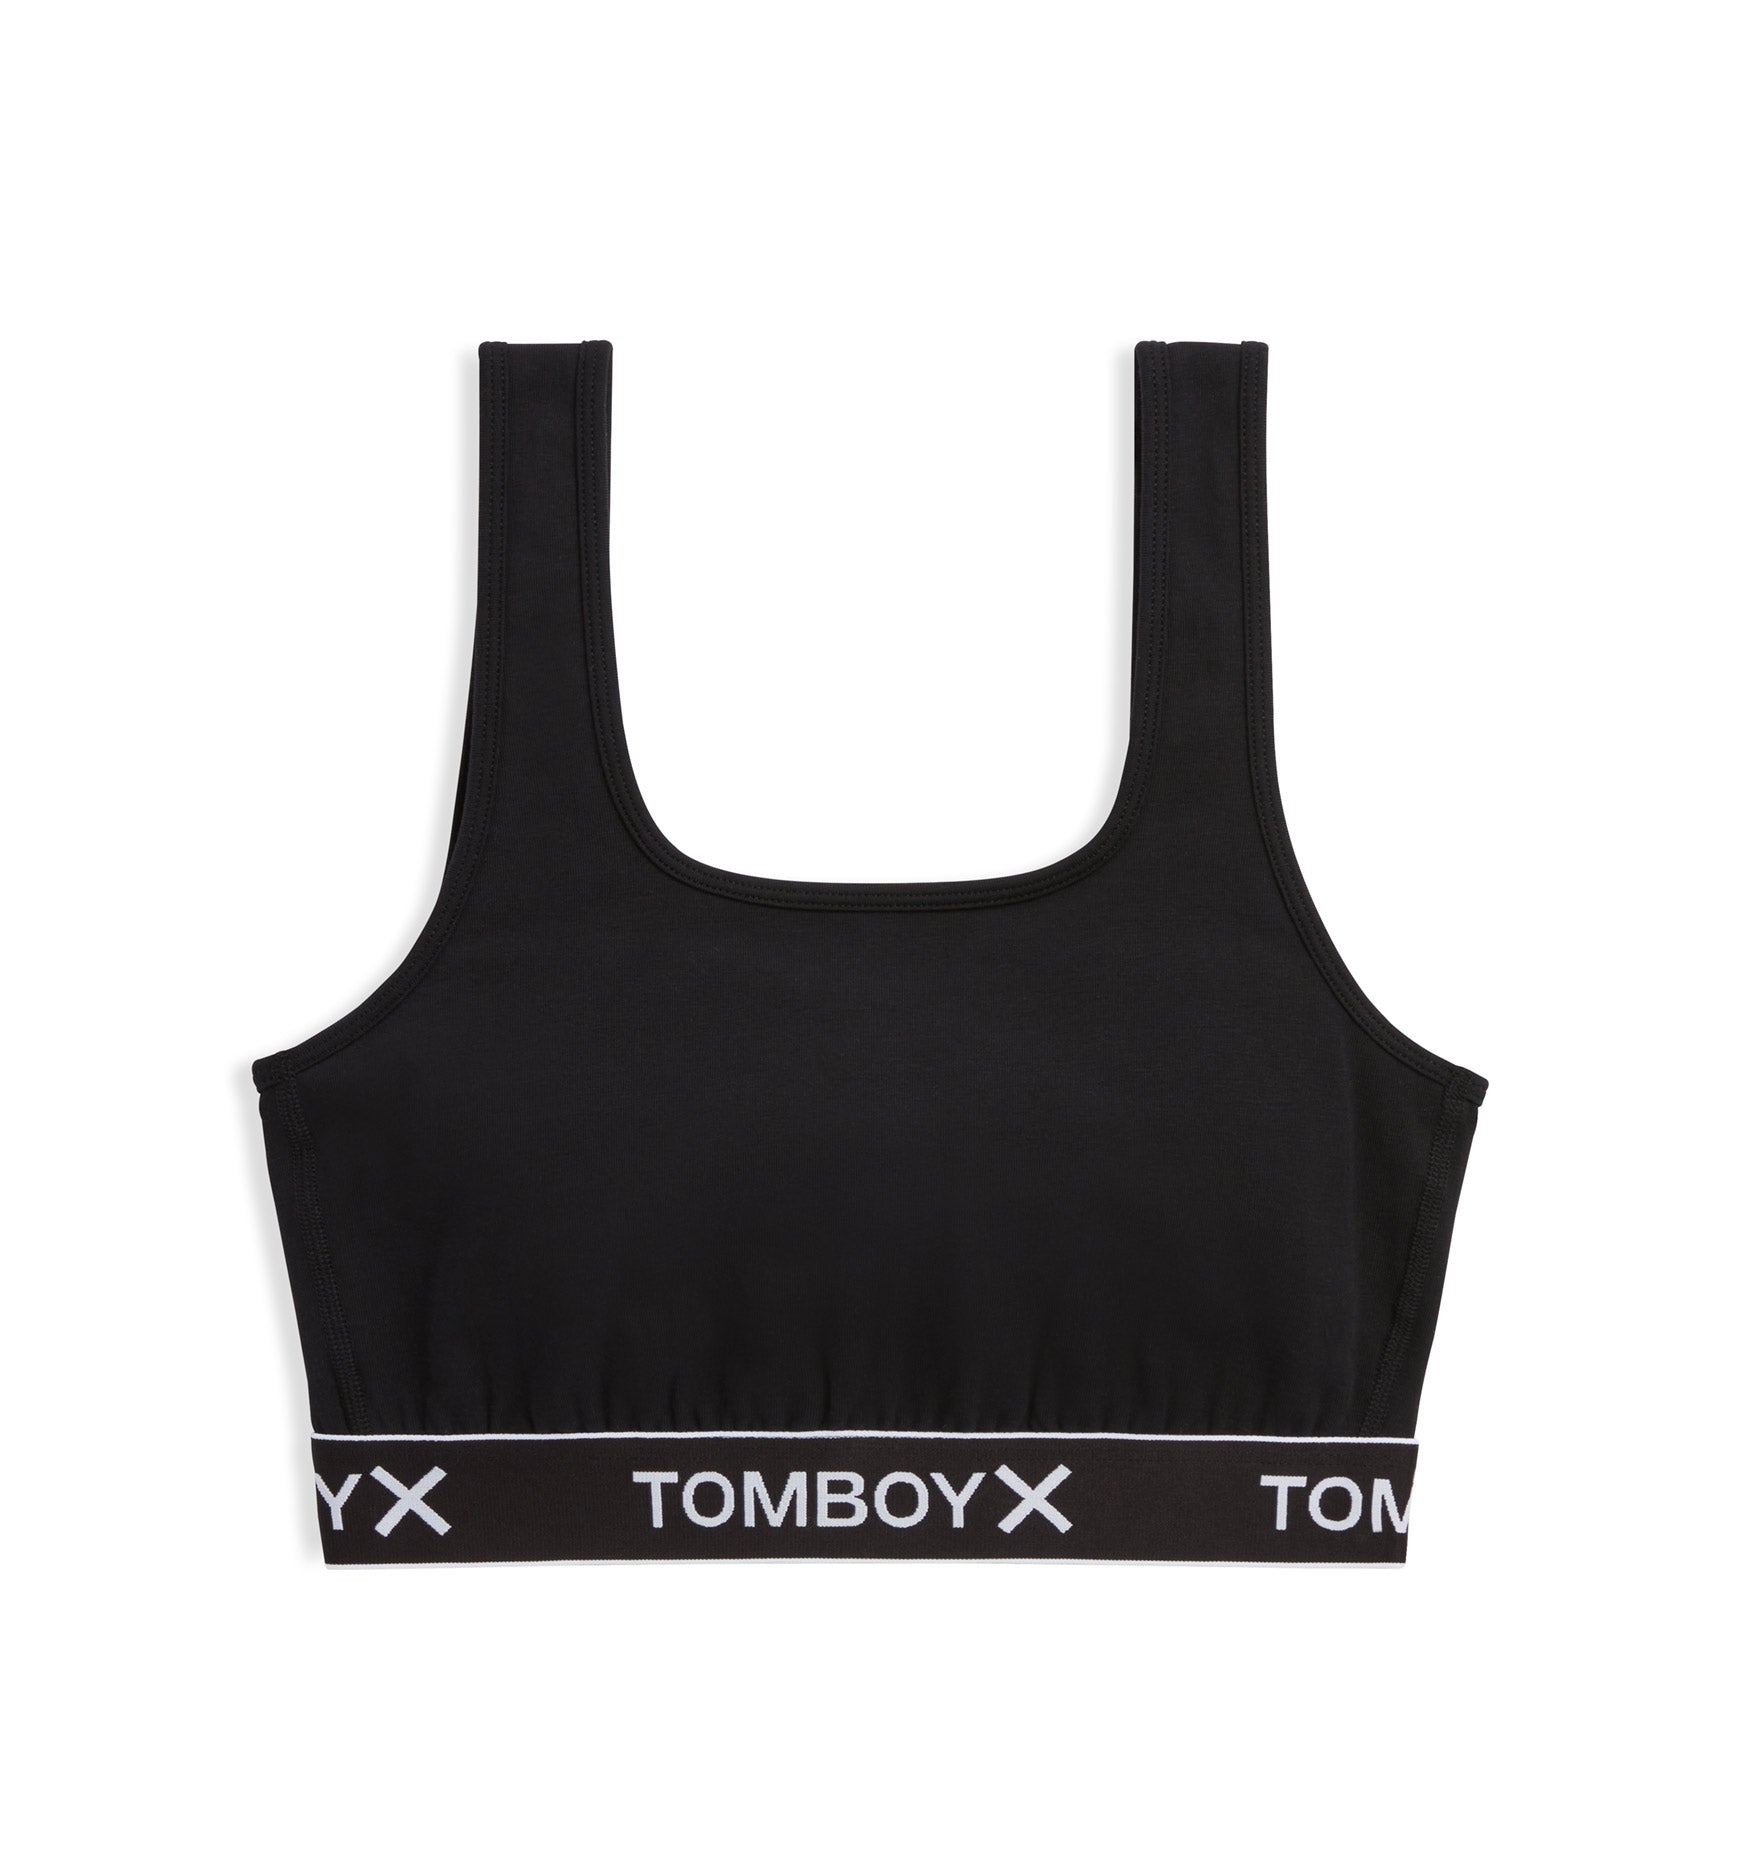 TomboyX Bras & Bralettes for Women